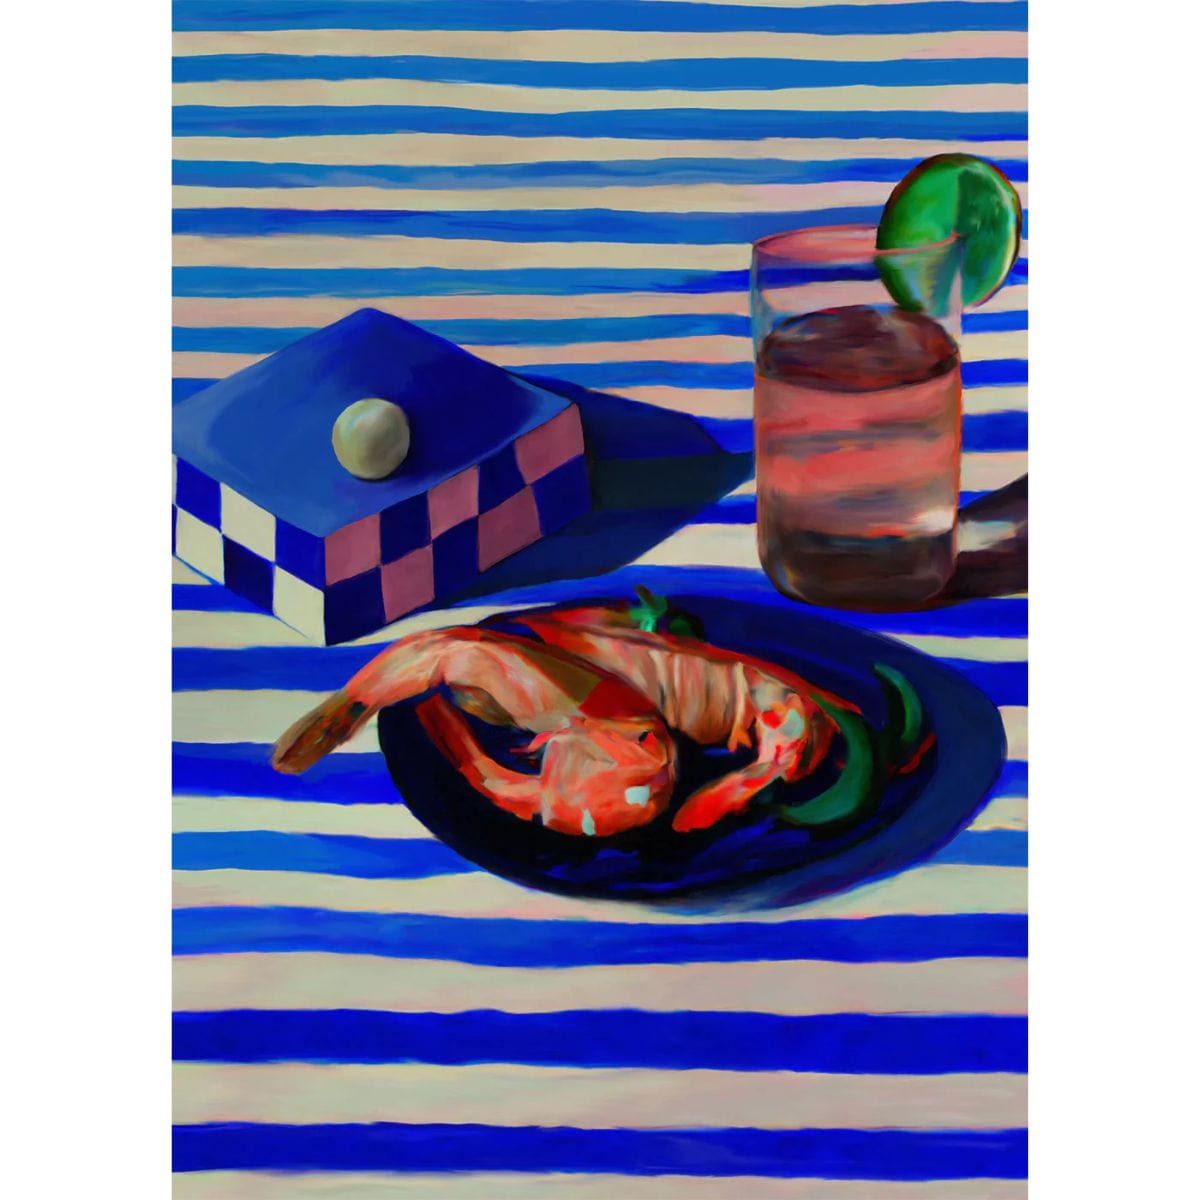 PAPER COLLECTIVE Poster Πόστερ, Shrimp & Stripes, 30x40, Μπλε/Πορτοκαλί, Sustainable Paper, PAPER COLLECTIVE